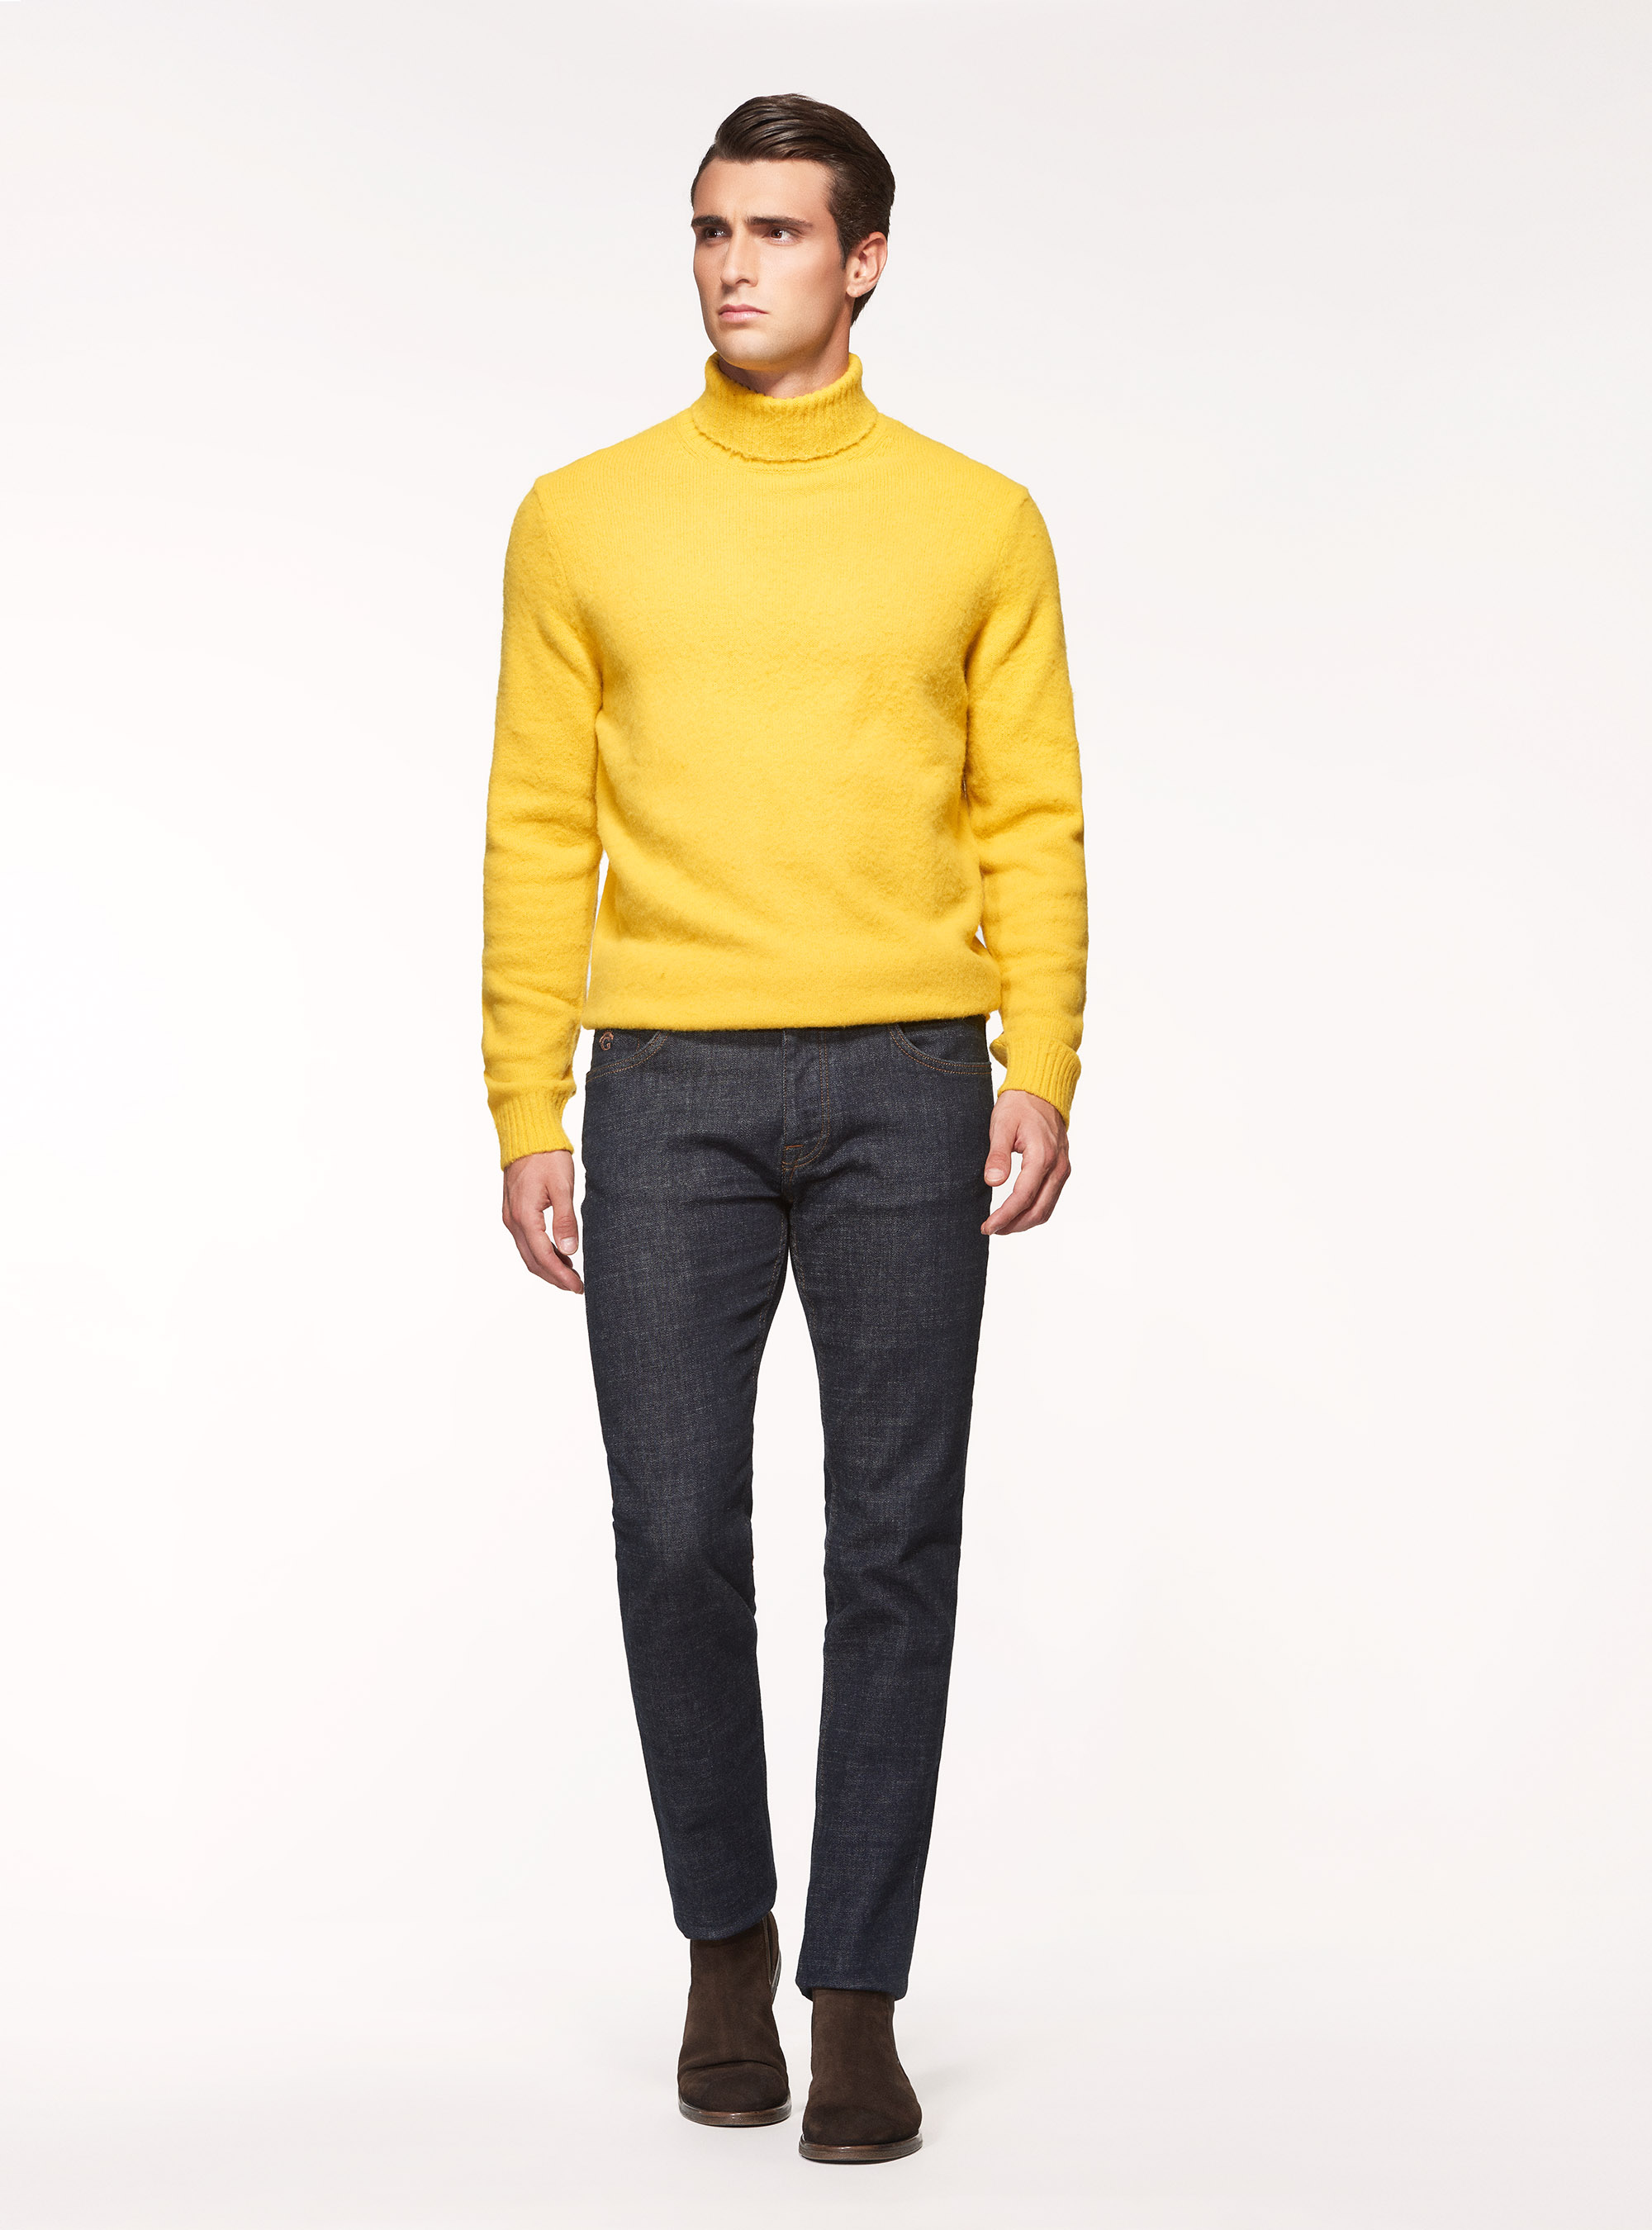 Brushed wool blend turtleneck sweater | GutteridgeUS | Men's catalog ...